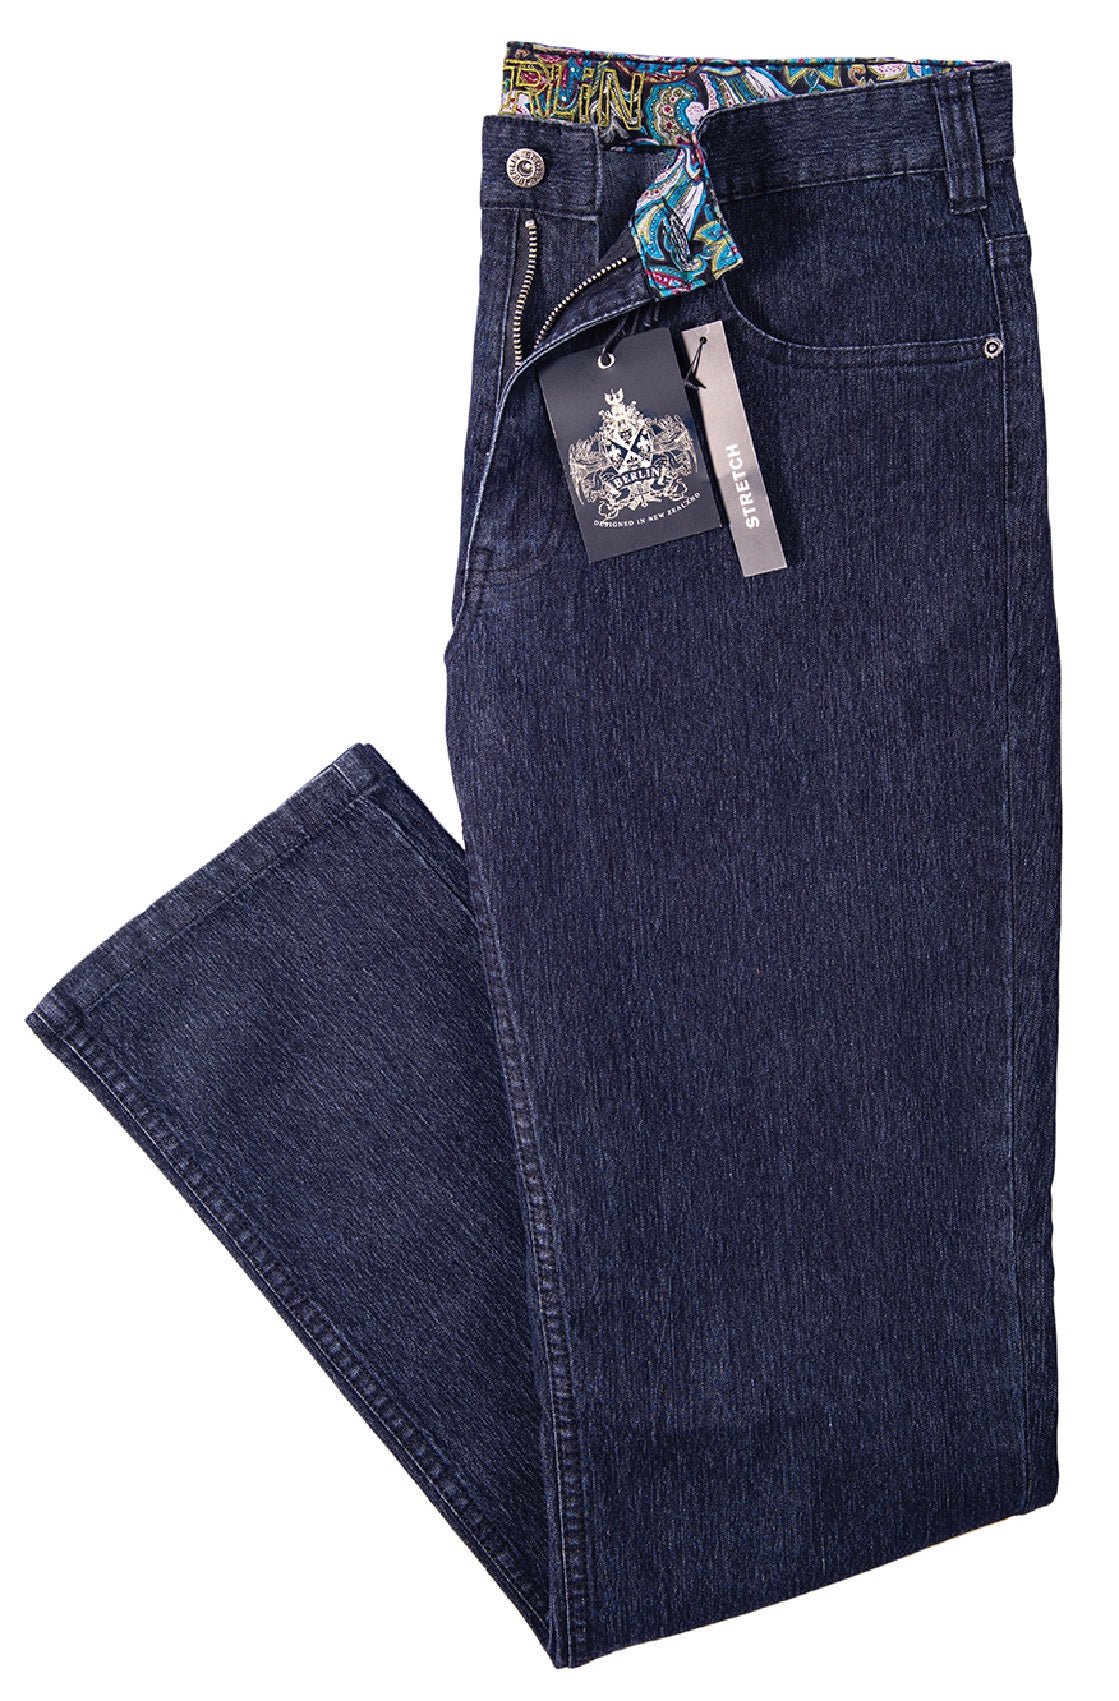 Berlin P2 Boulevard Jeans - Thomson's Suits Ltd - 80R - Navy - 3993